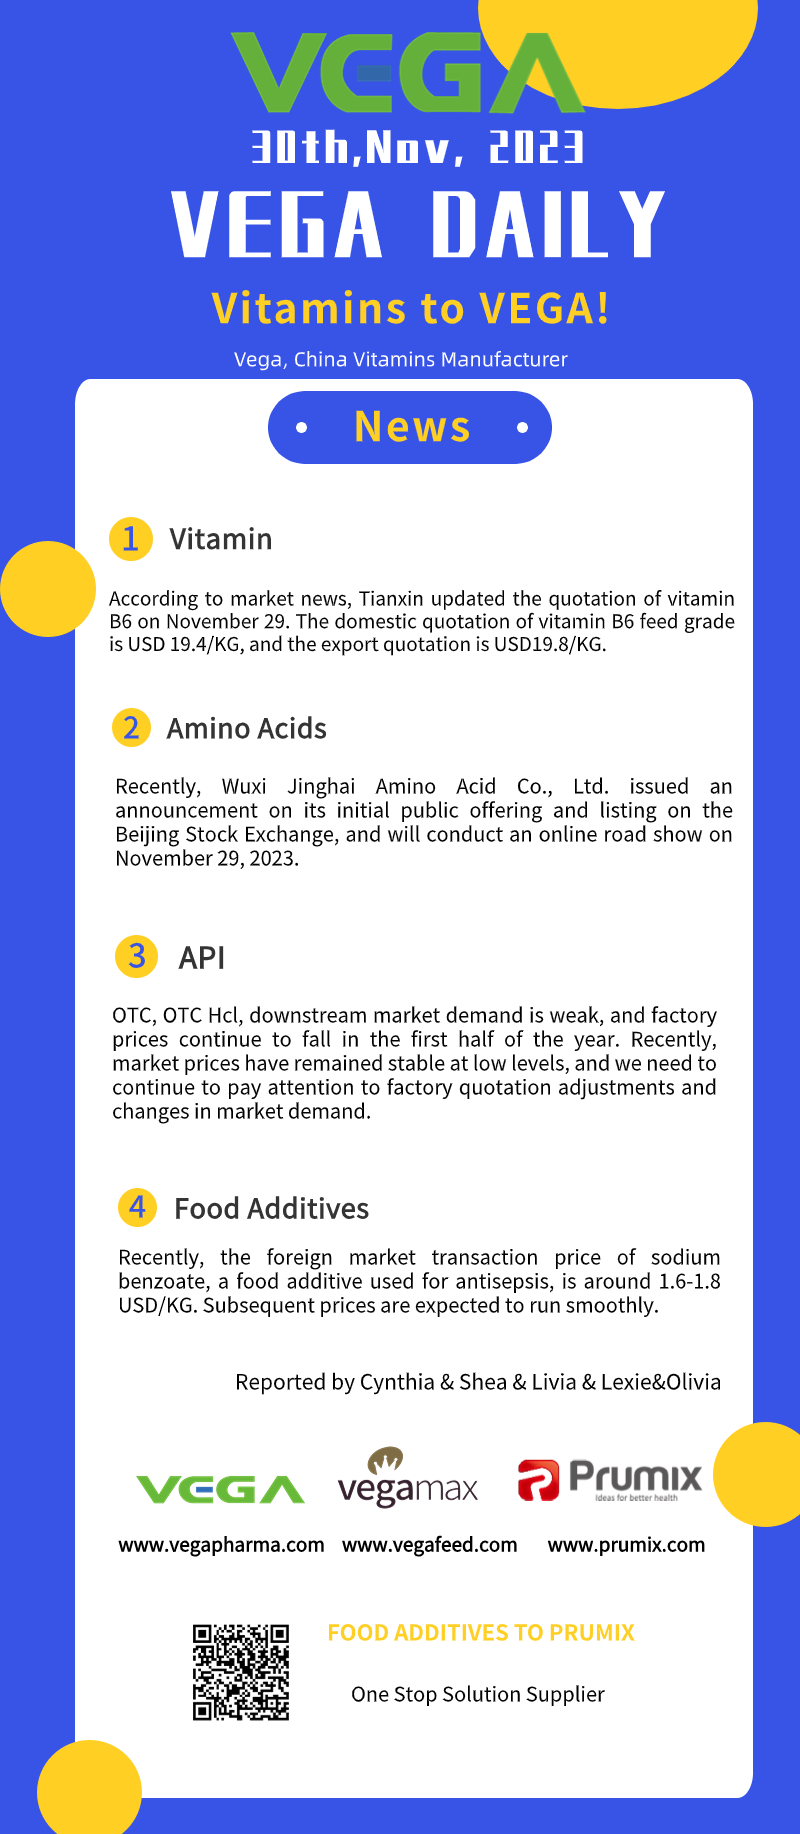 Vega Daily Dated on Nov 30th 2023 Vitamin Amino Acid APl Food Additives.png